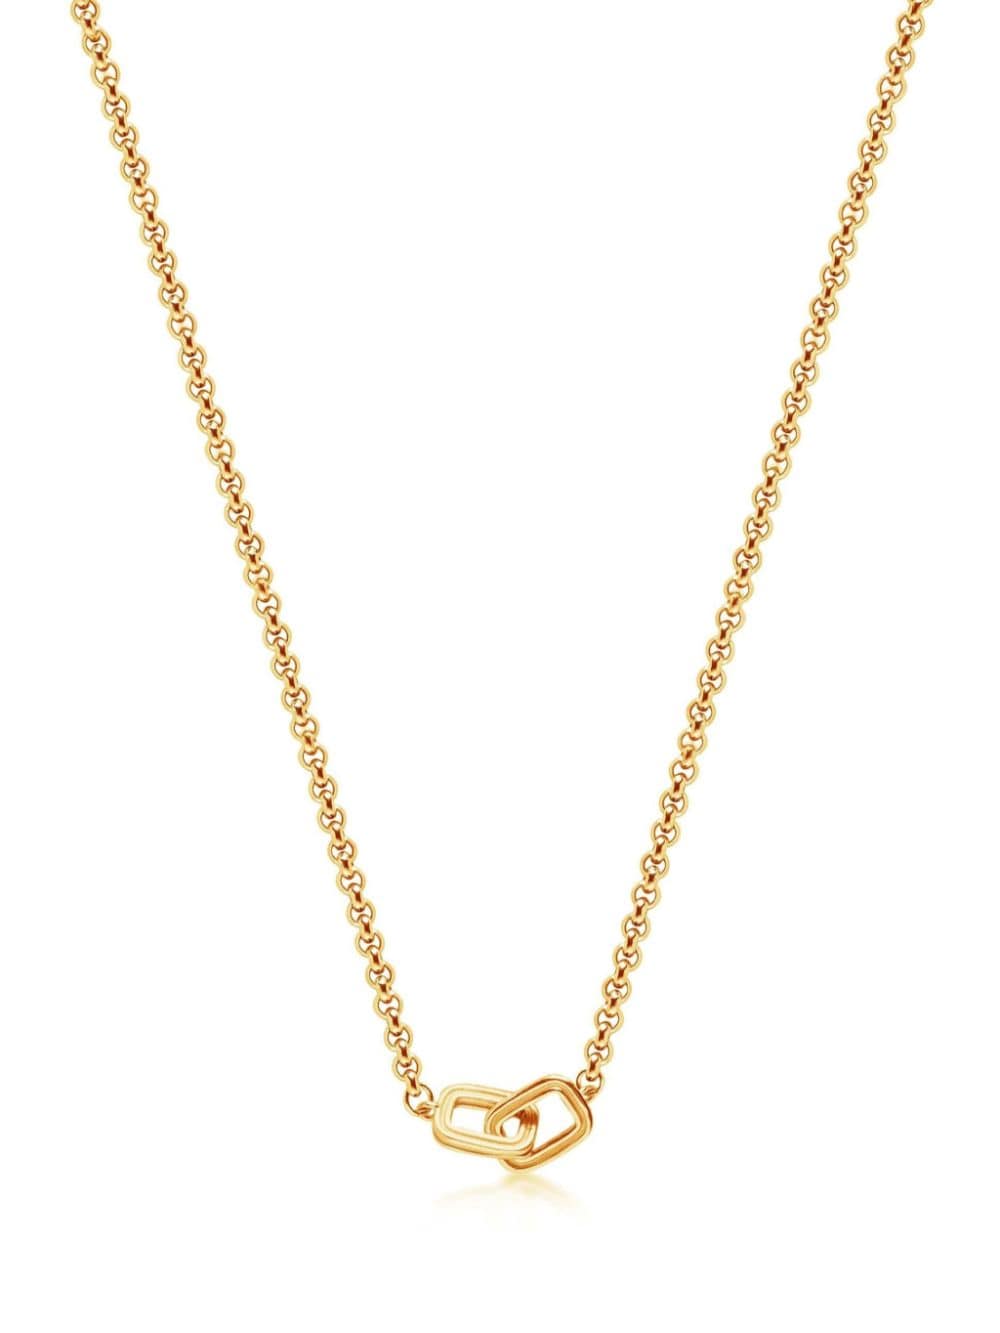 Nialaya Jewelry intertwined gold-plated necklace von Nialaya Jewelry